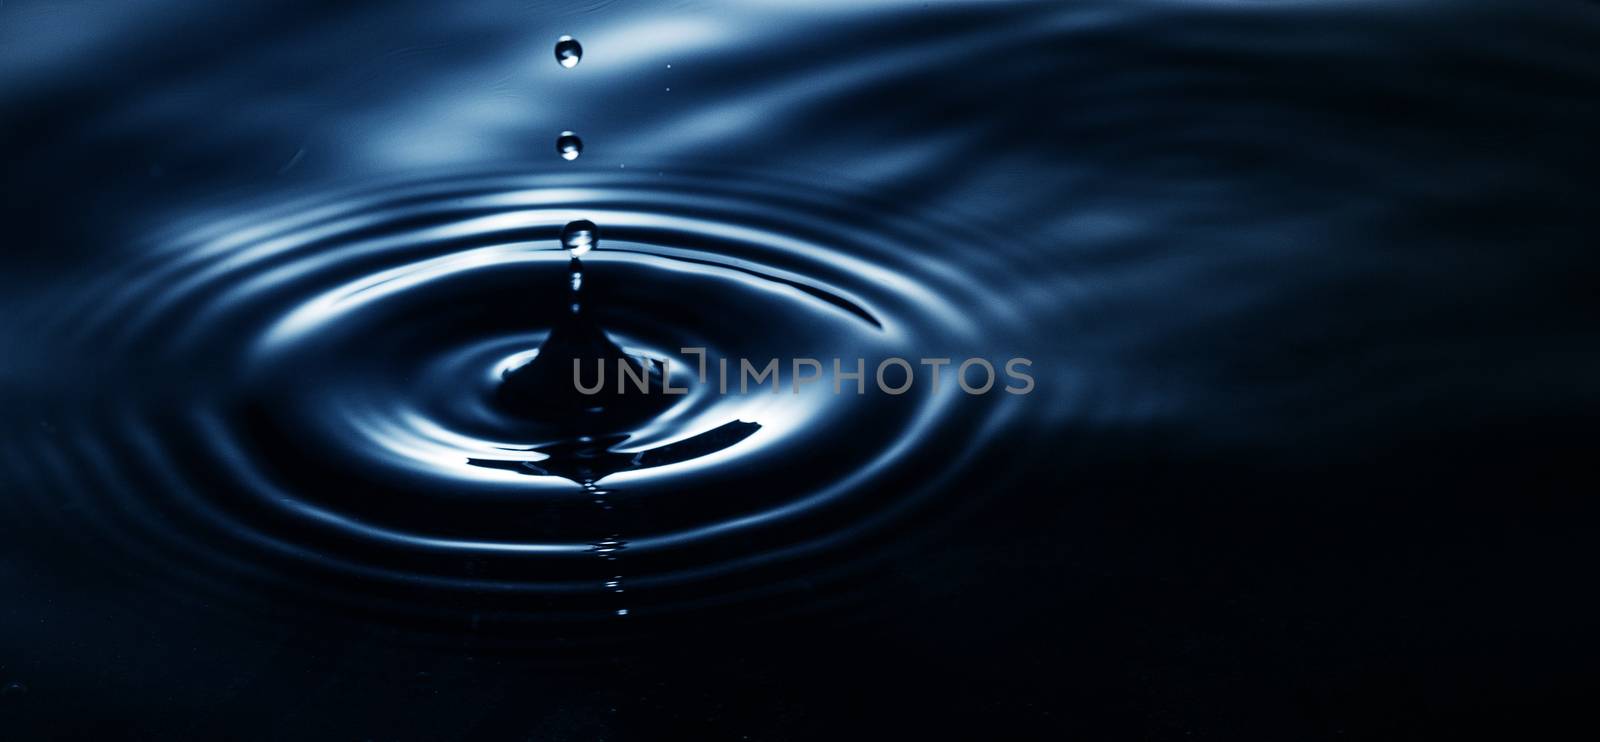 Droplet in the water by rufatjumali